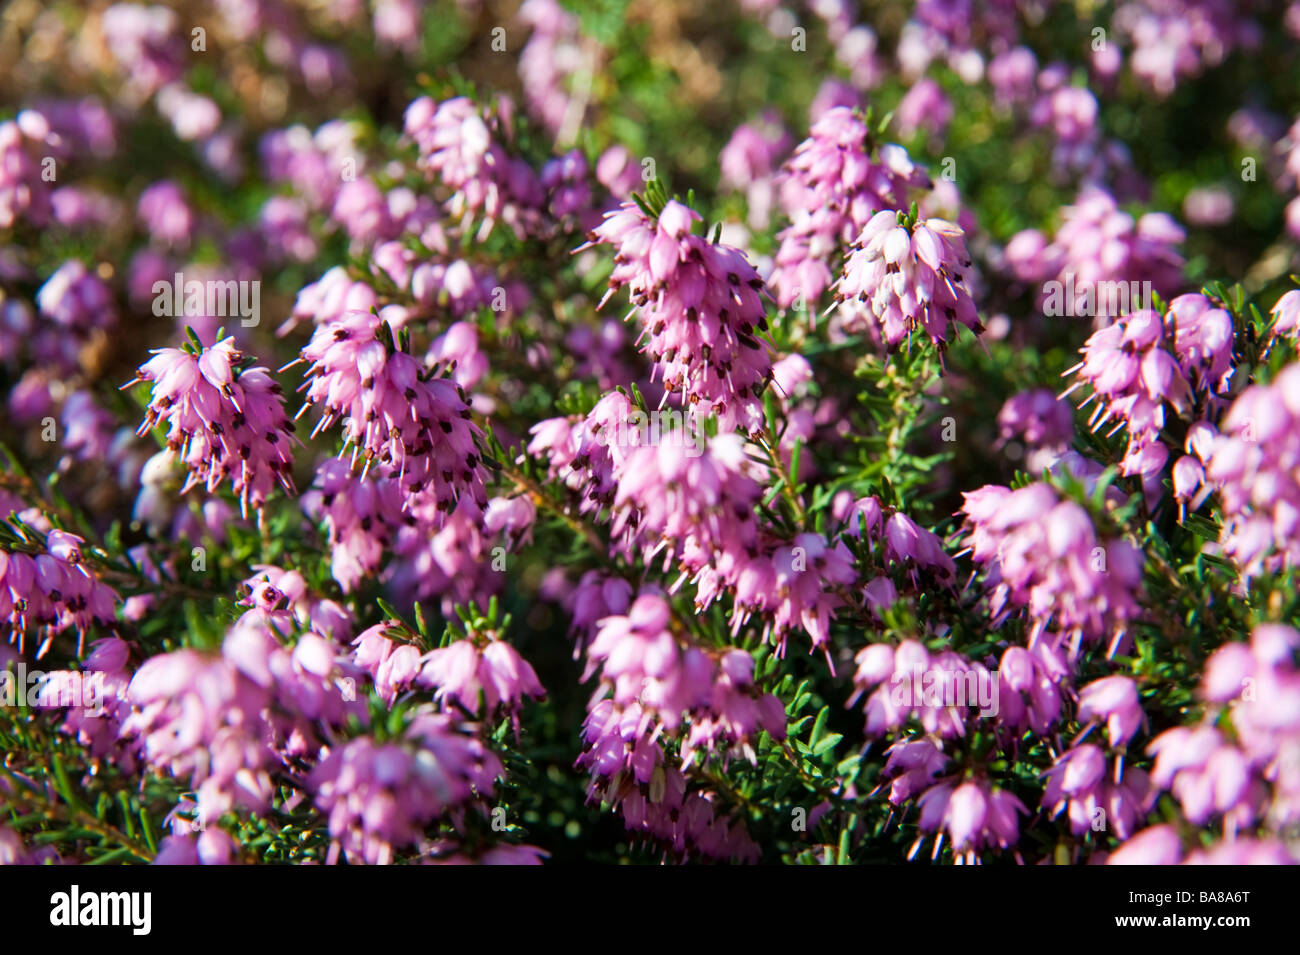 Erica plant blooming with pink or purple blossoms | Blühende Erika mit rosa oder purpurfarbenen Blüten Stock Photo